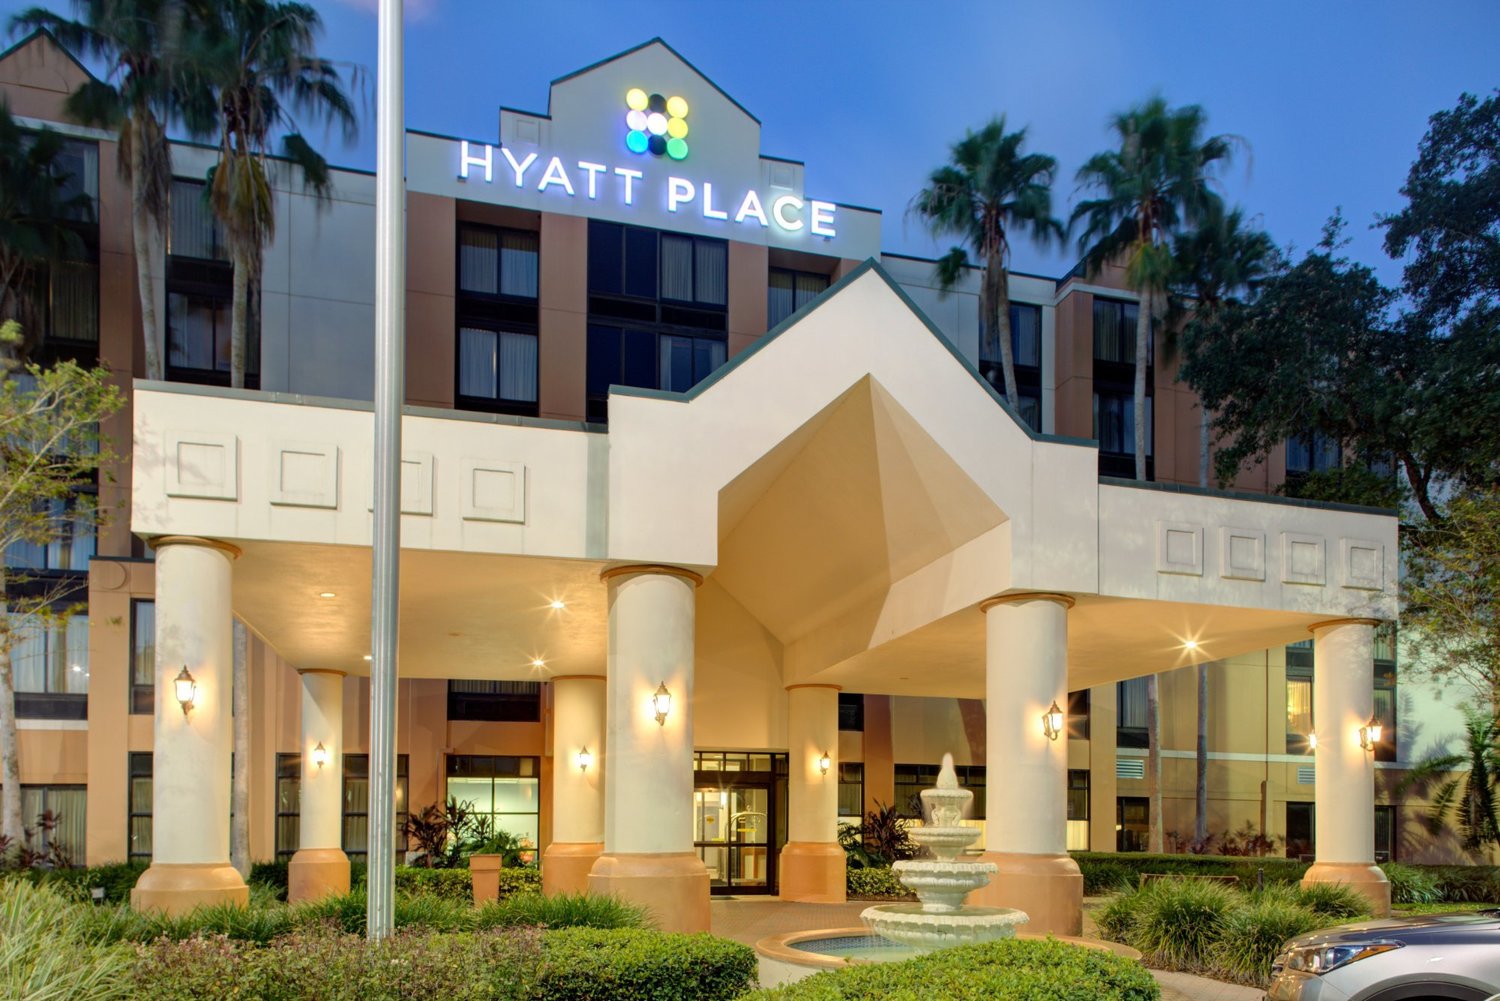 Hyatt Place Tampa Busch Gardens Tampa Fl Jobs Hospitality Online